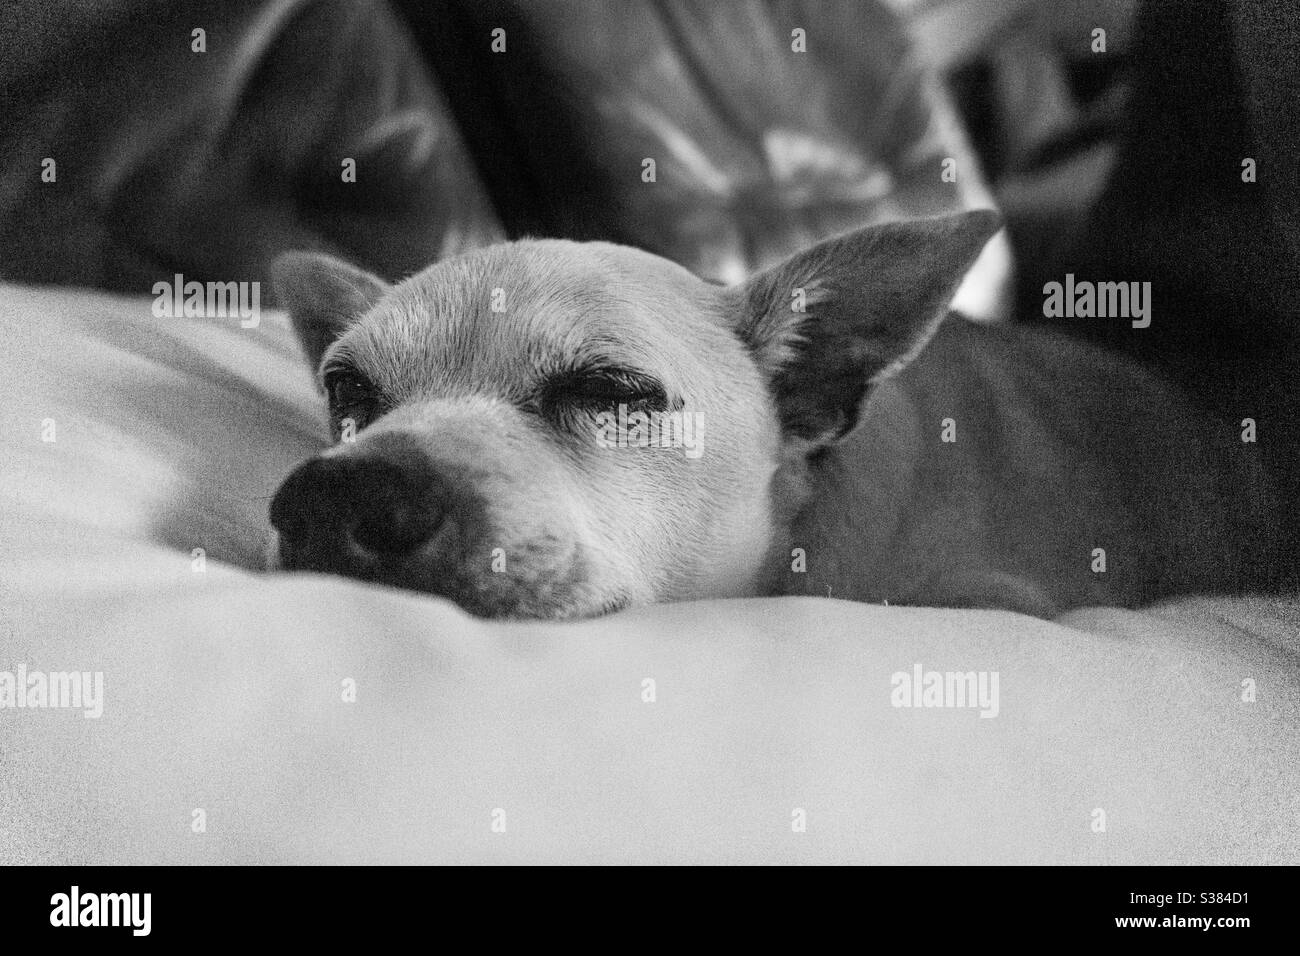 Sleeping dog Stock Photo